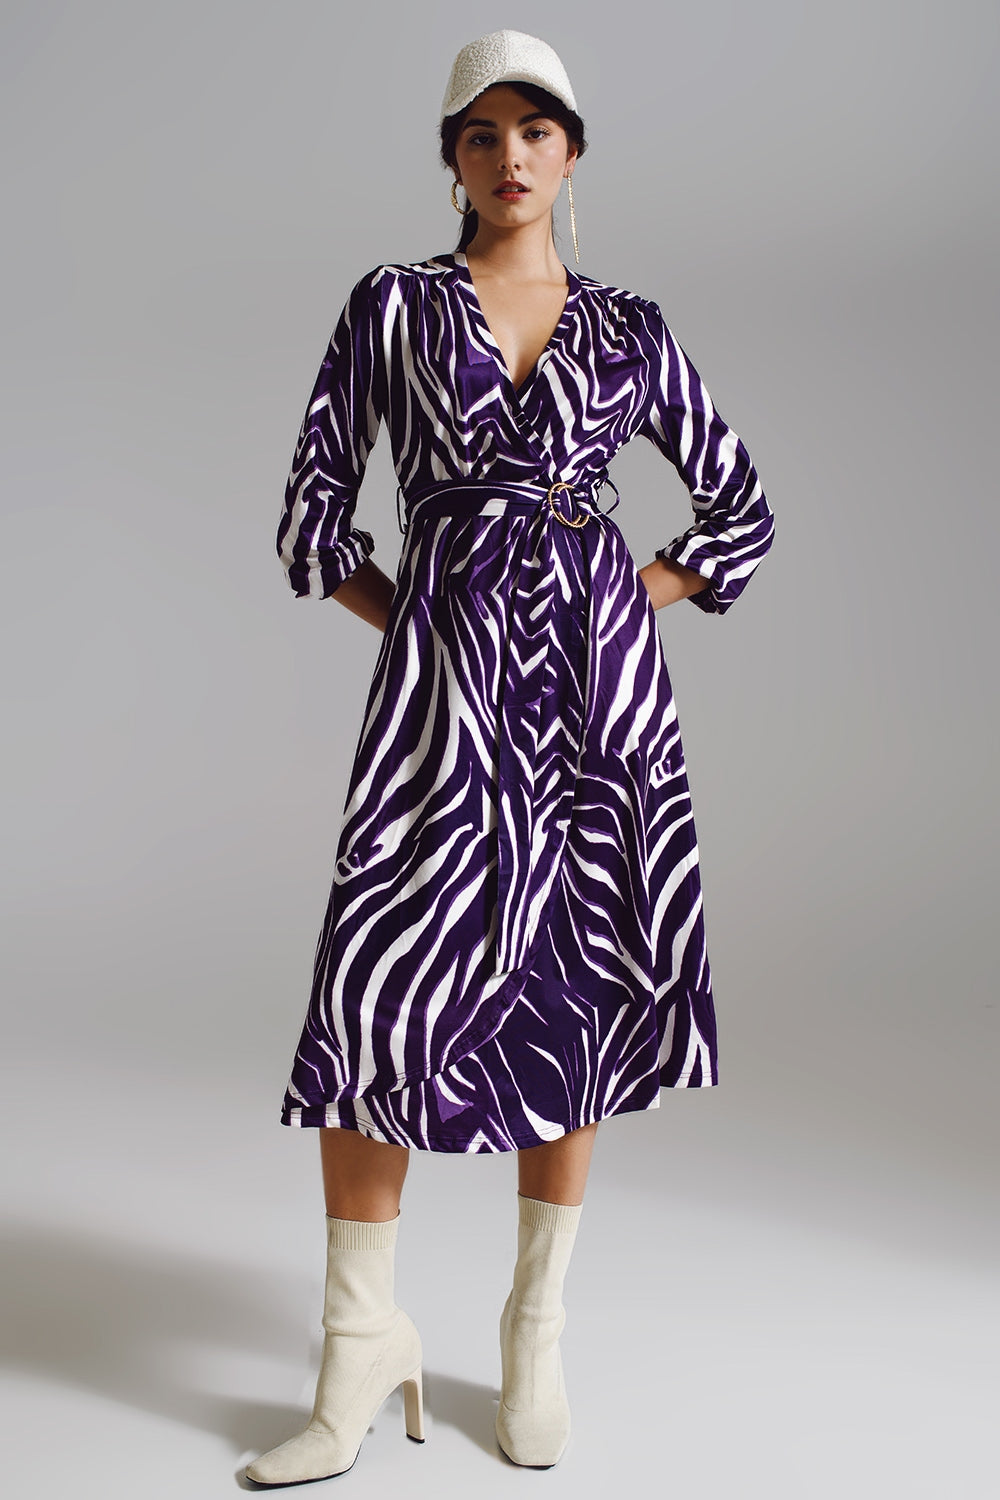 Q2 Midi Belted Wrap Dress in Purple and Cream Zebra Print